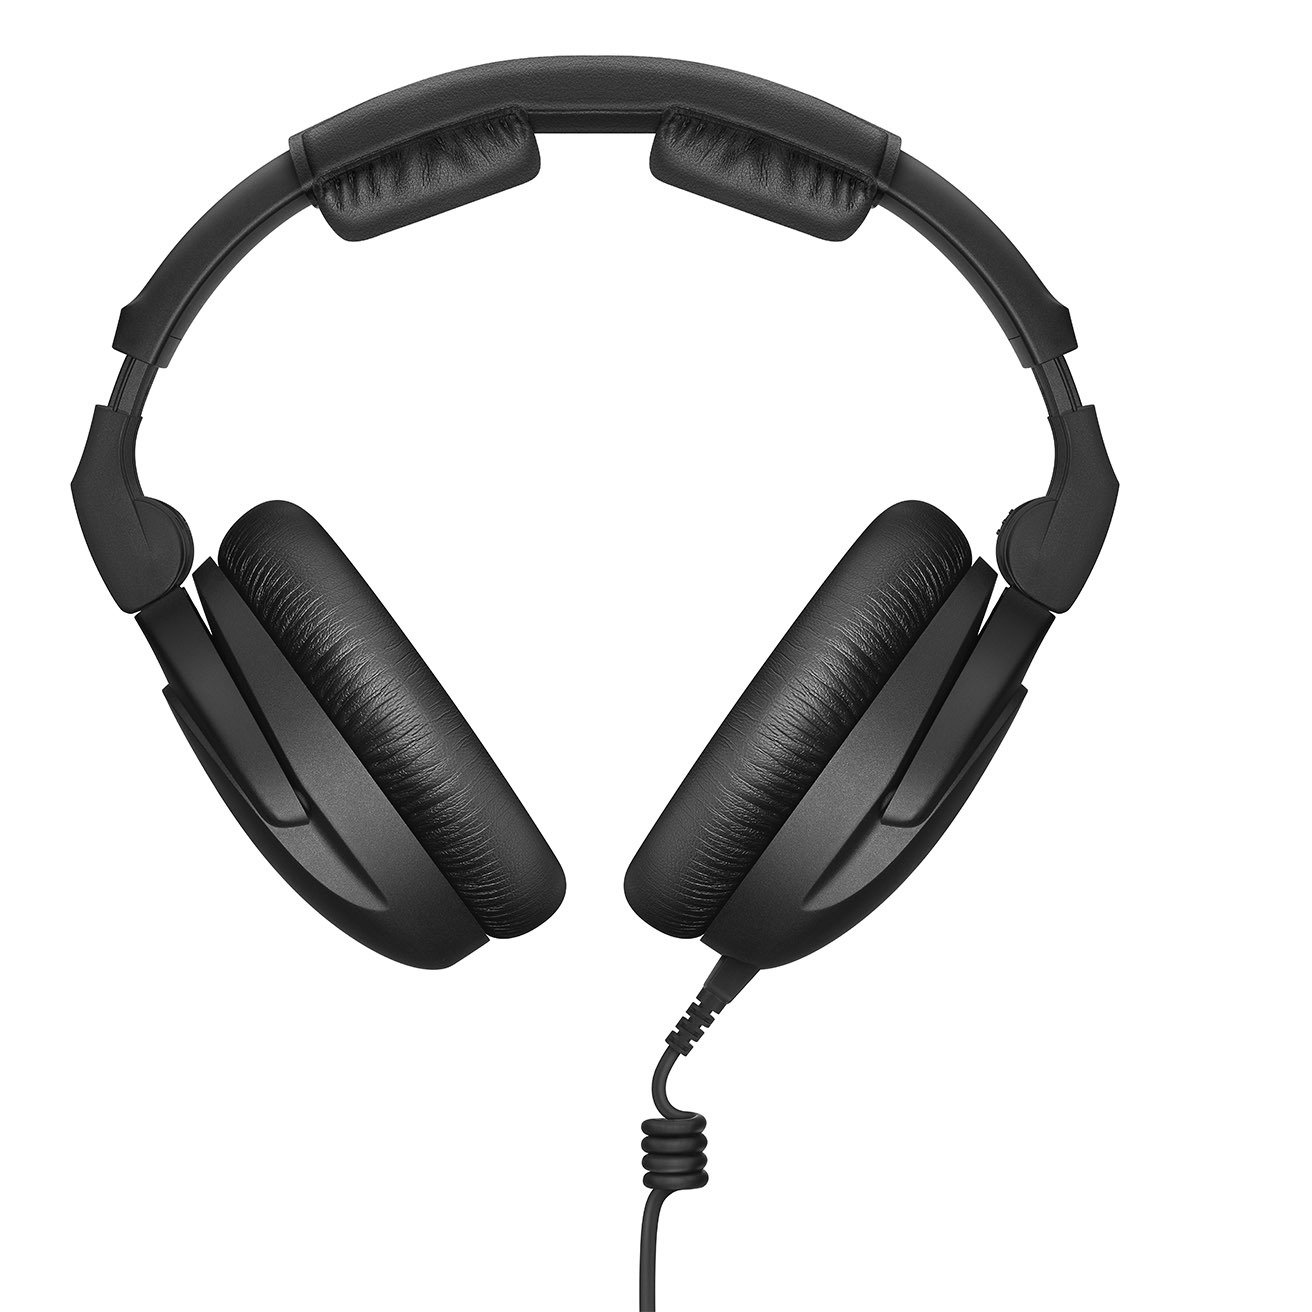 Sennheiser Hd300 Pro - Closed headset - Variation 2